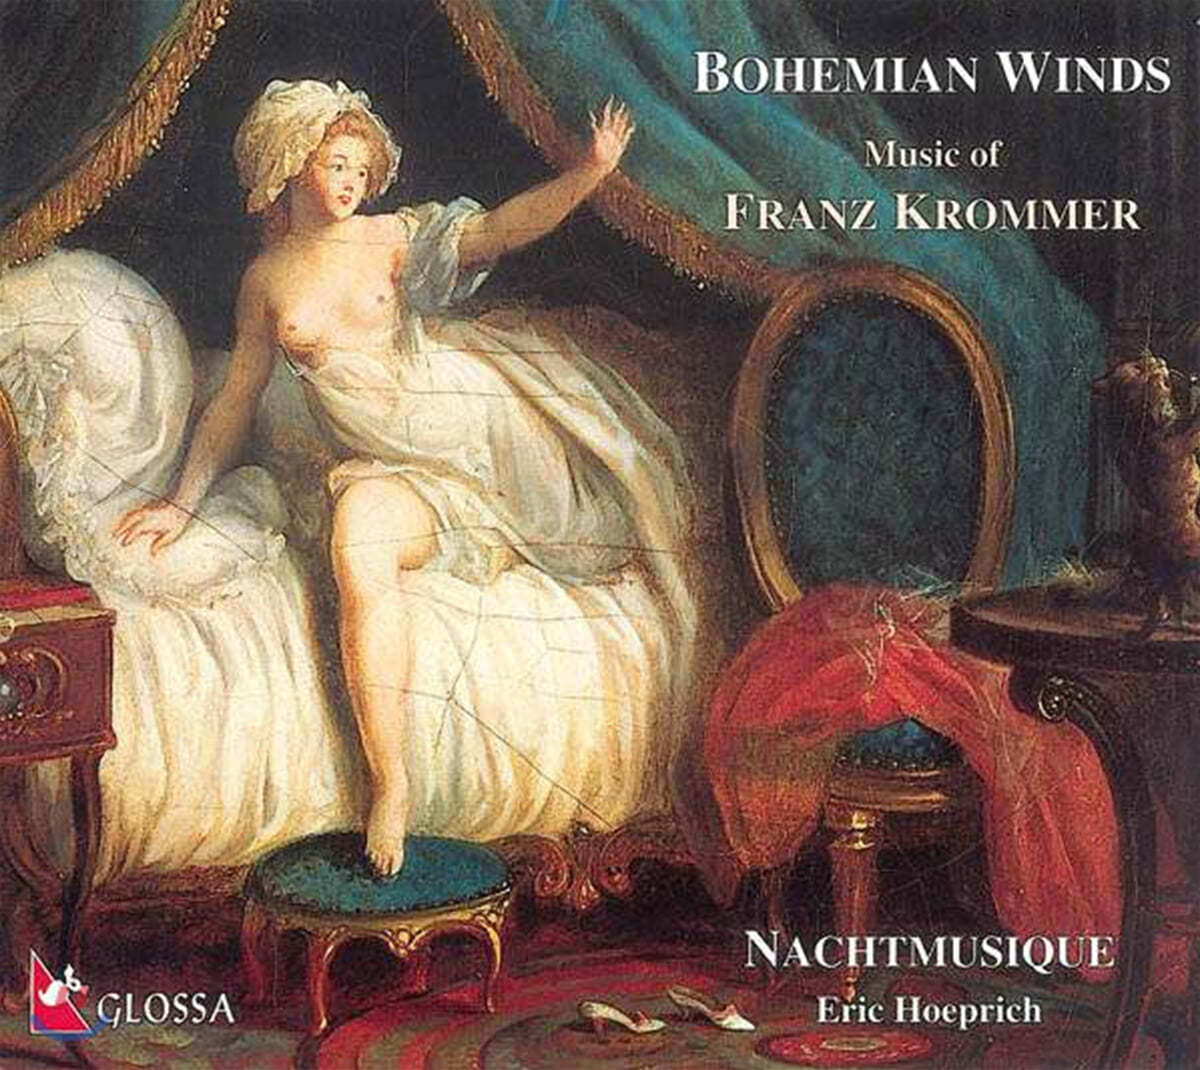 Eric Hoeprich 크롬머: 보헤미아 지방의 관악 음악 (Franz Krommer: Bohemian Winds)